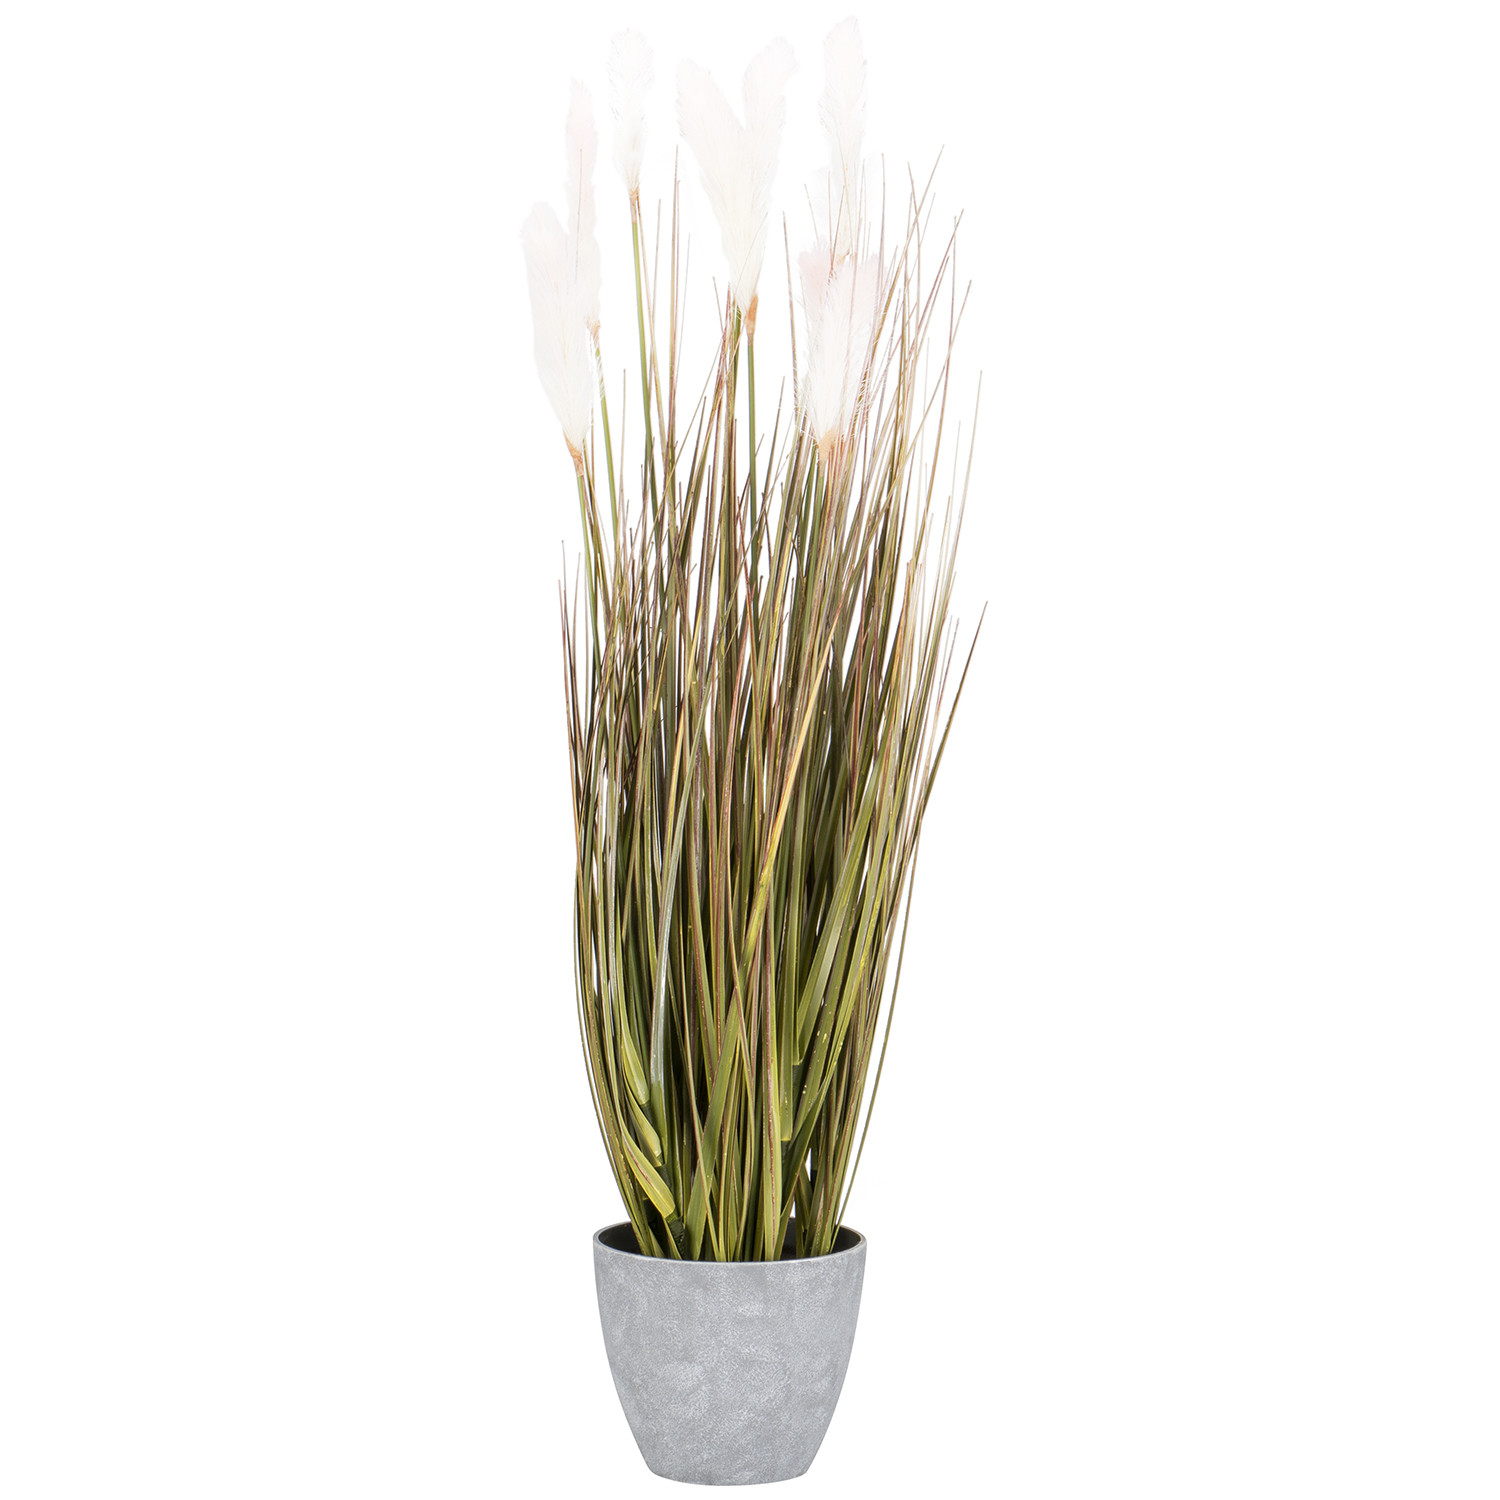 Blush Pampas Grass in Pot Artificial Plant 91cm Image